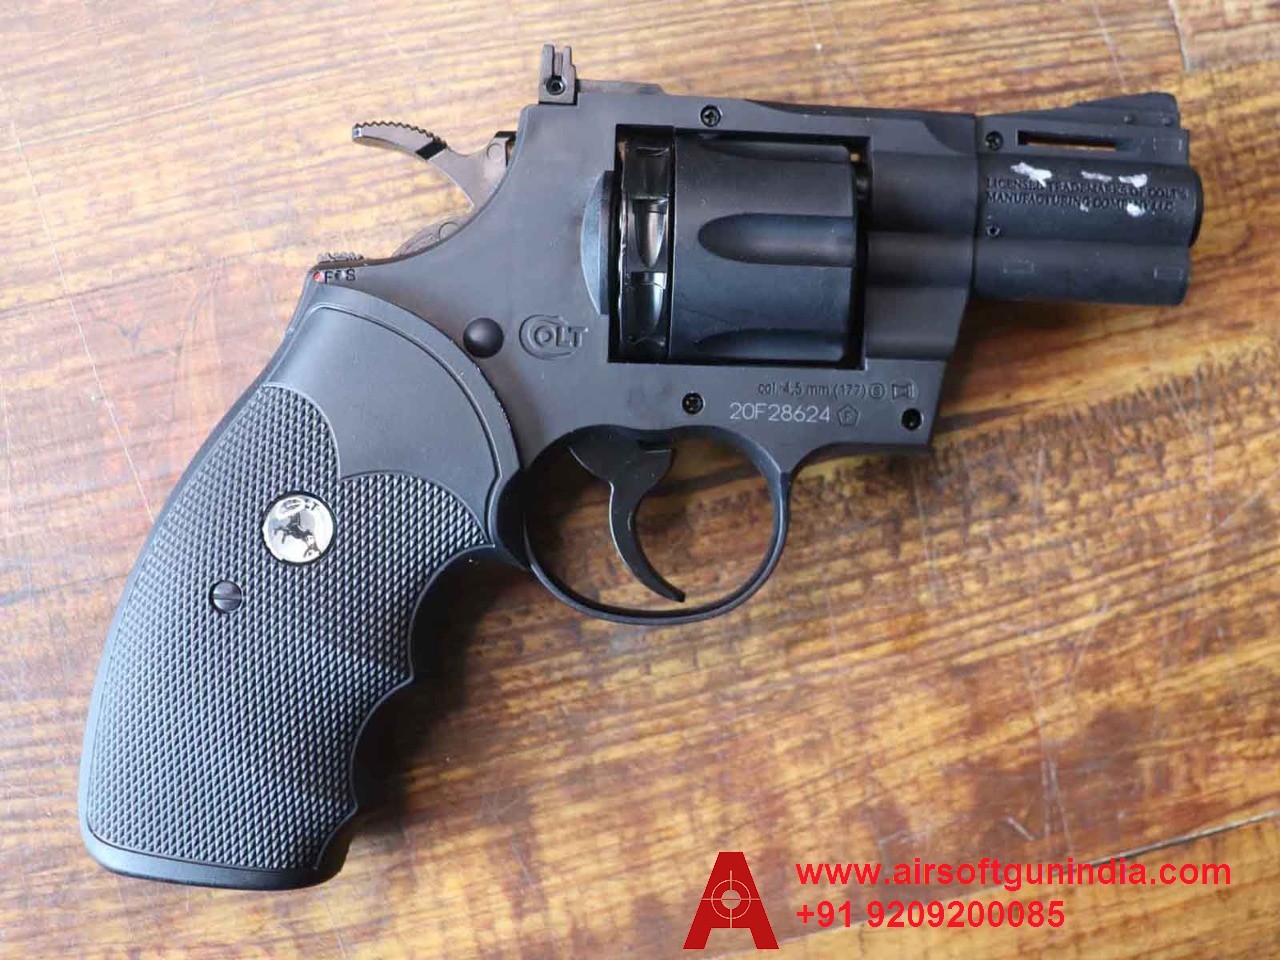 UMAREX Colt Python 357 Pellet And BB .177Cal, 4.5mm Air Revolver By Airsoft Gun India